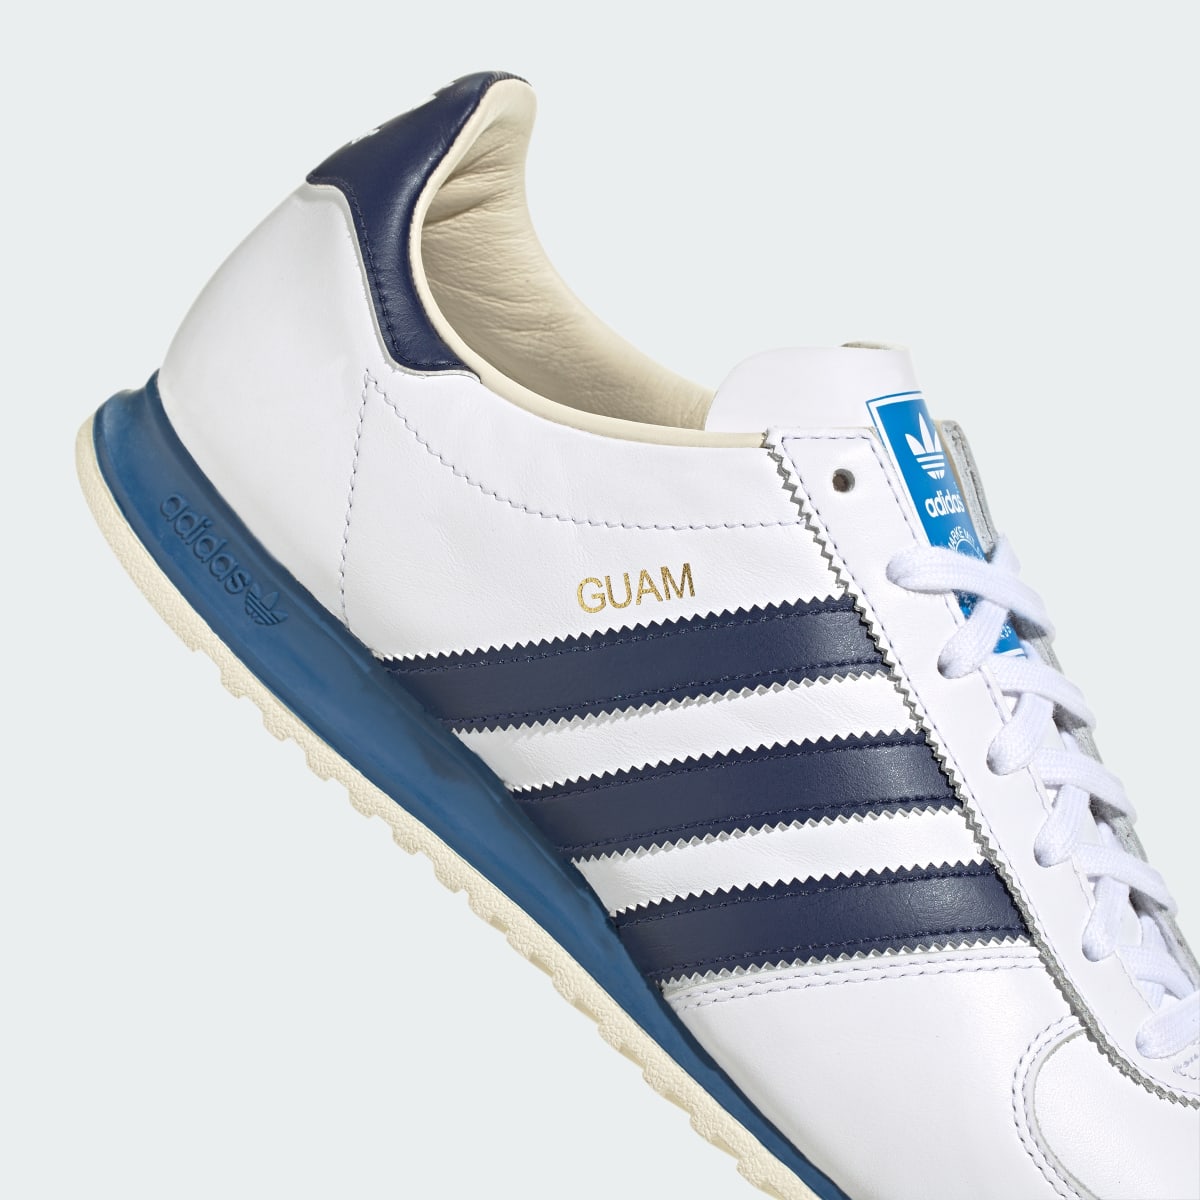 Adidas Guam Schuh. 10